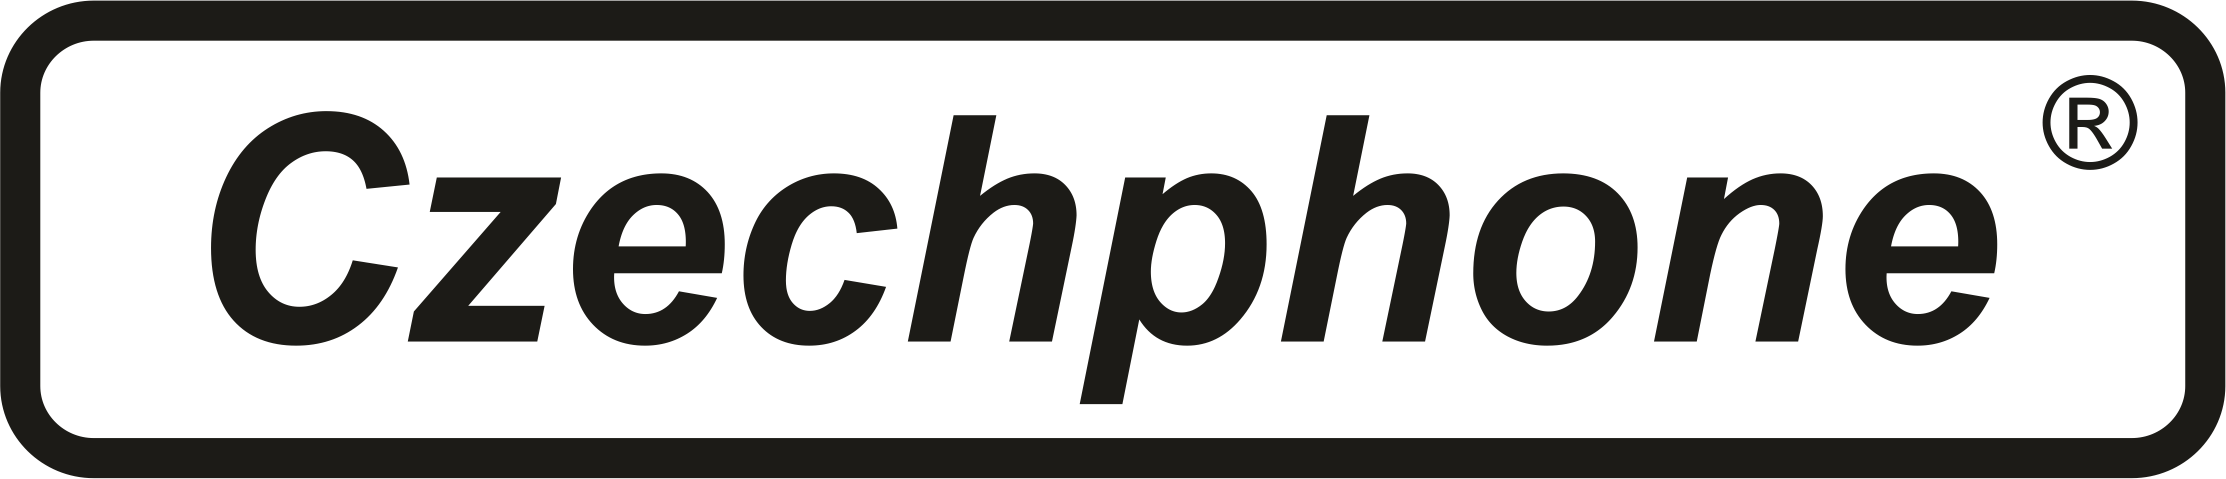 Czechphone